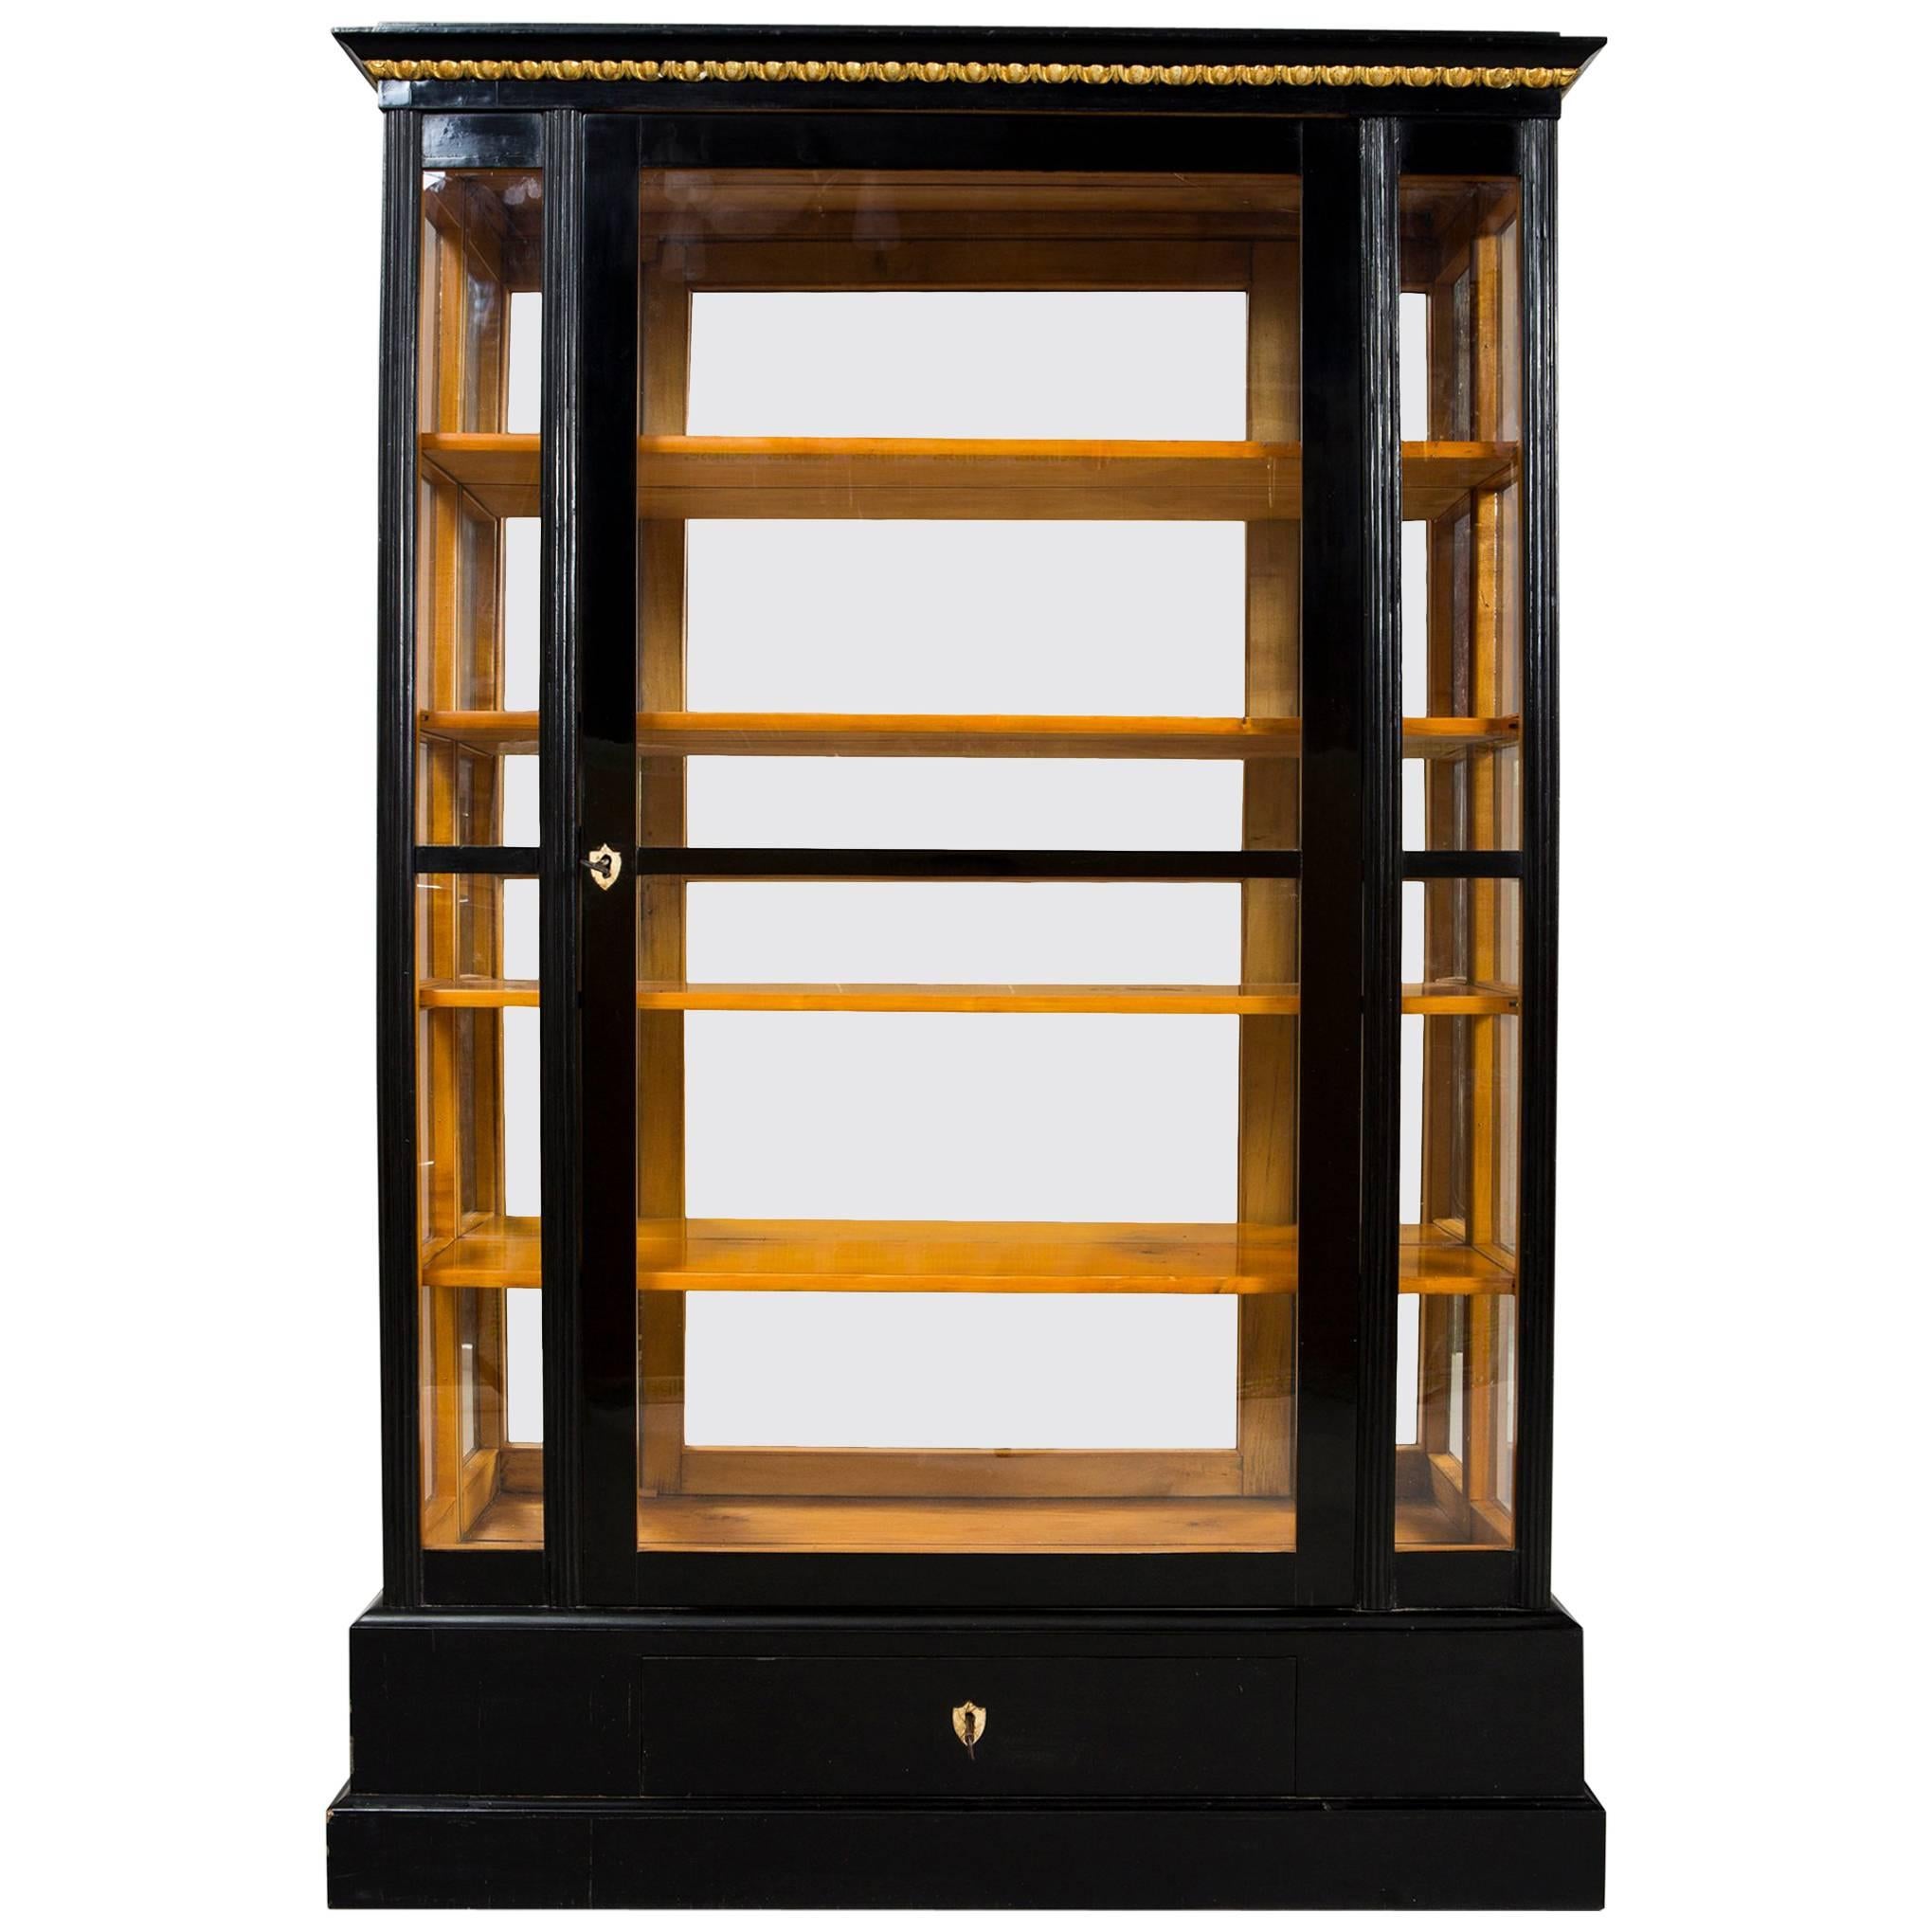 19th Century Empire Display Cabinet from Austria, Shellac polish, Ebonized